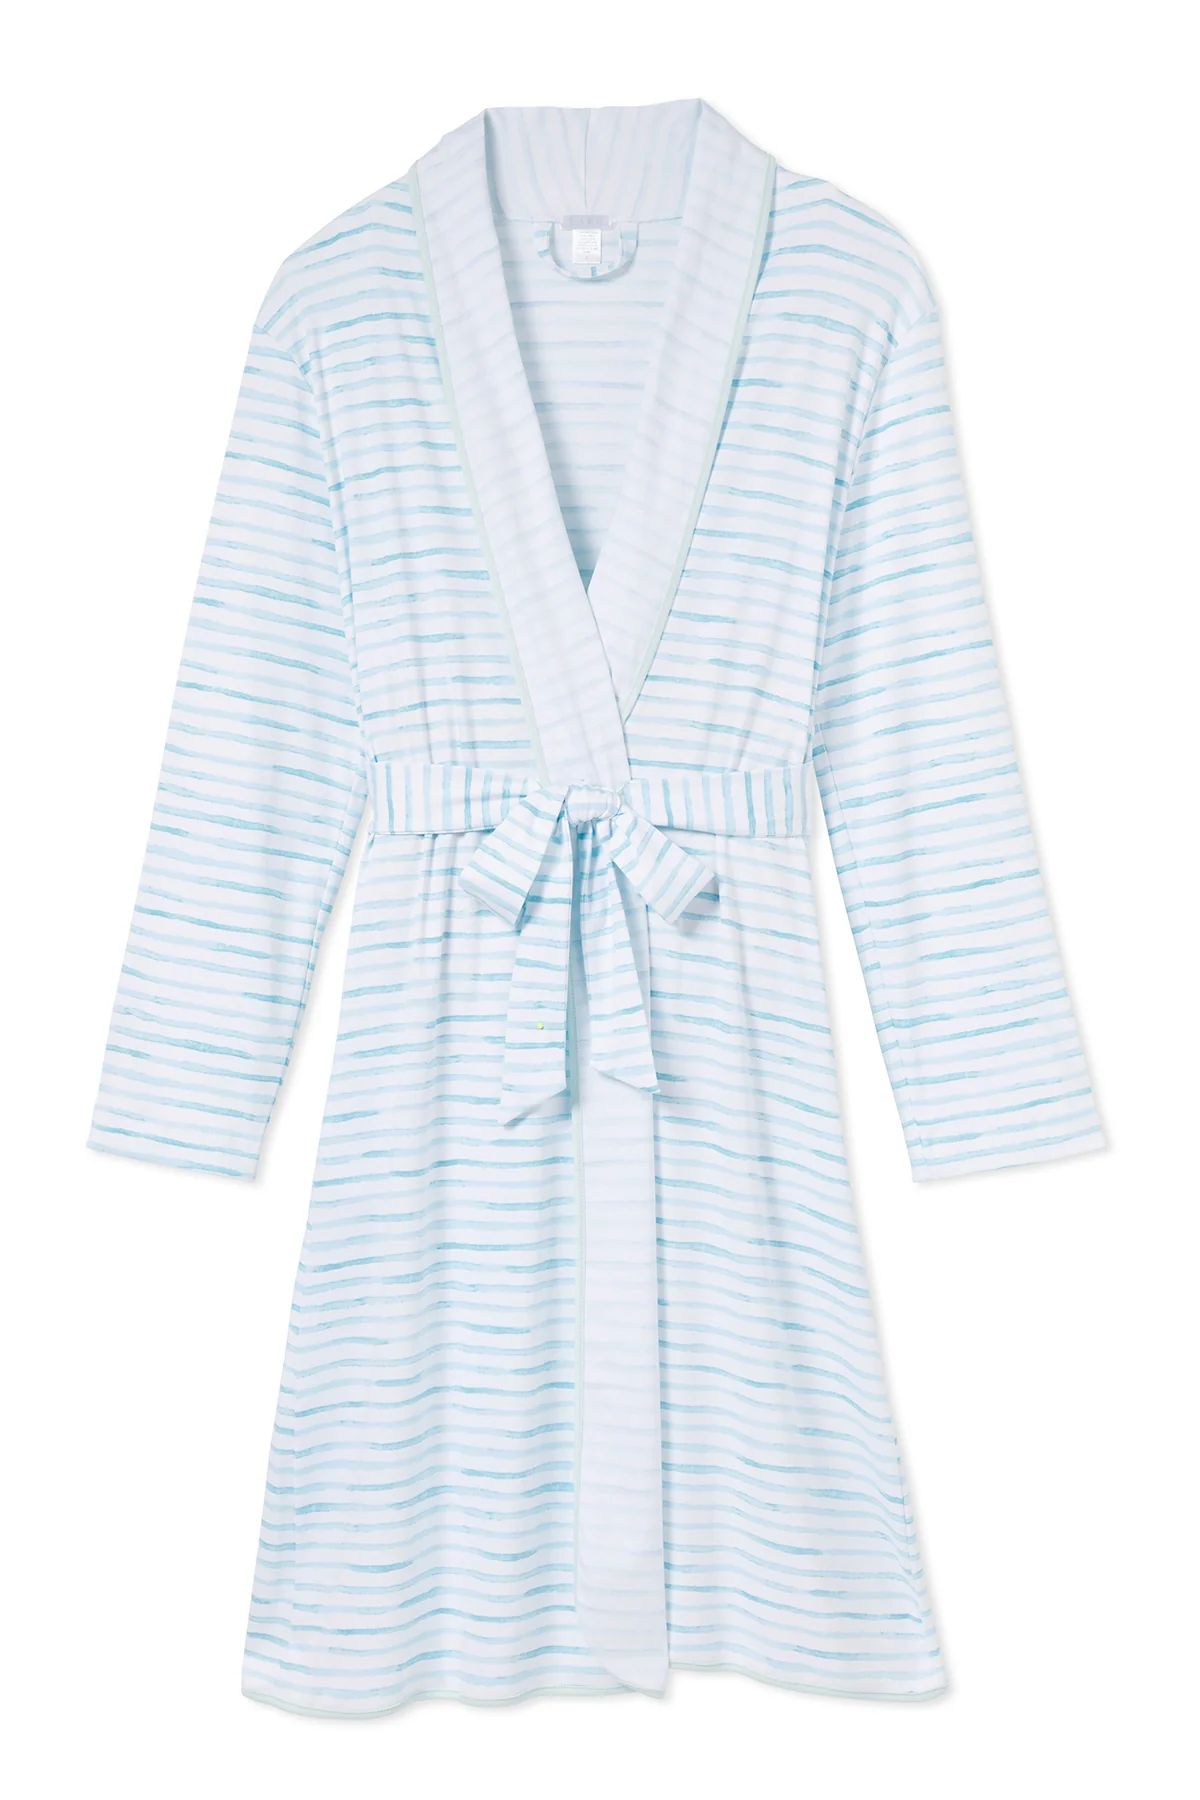 Pima Robe in Sea Breeze | LAKE Pajamas